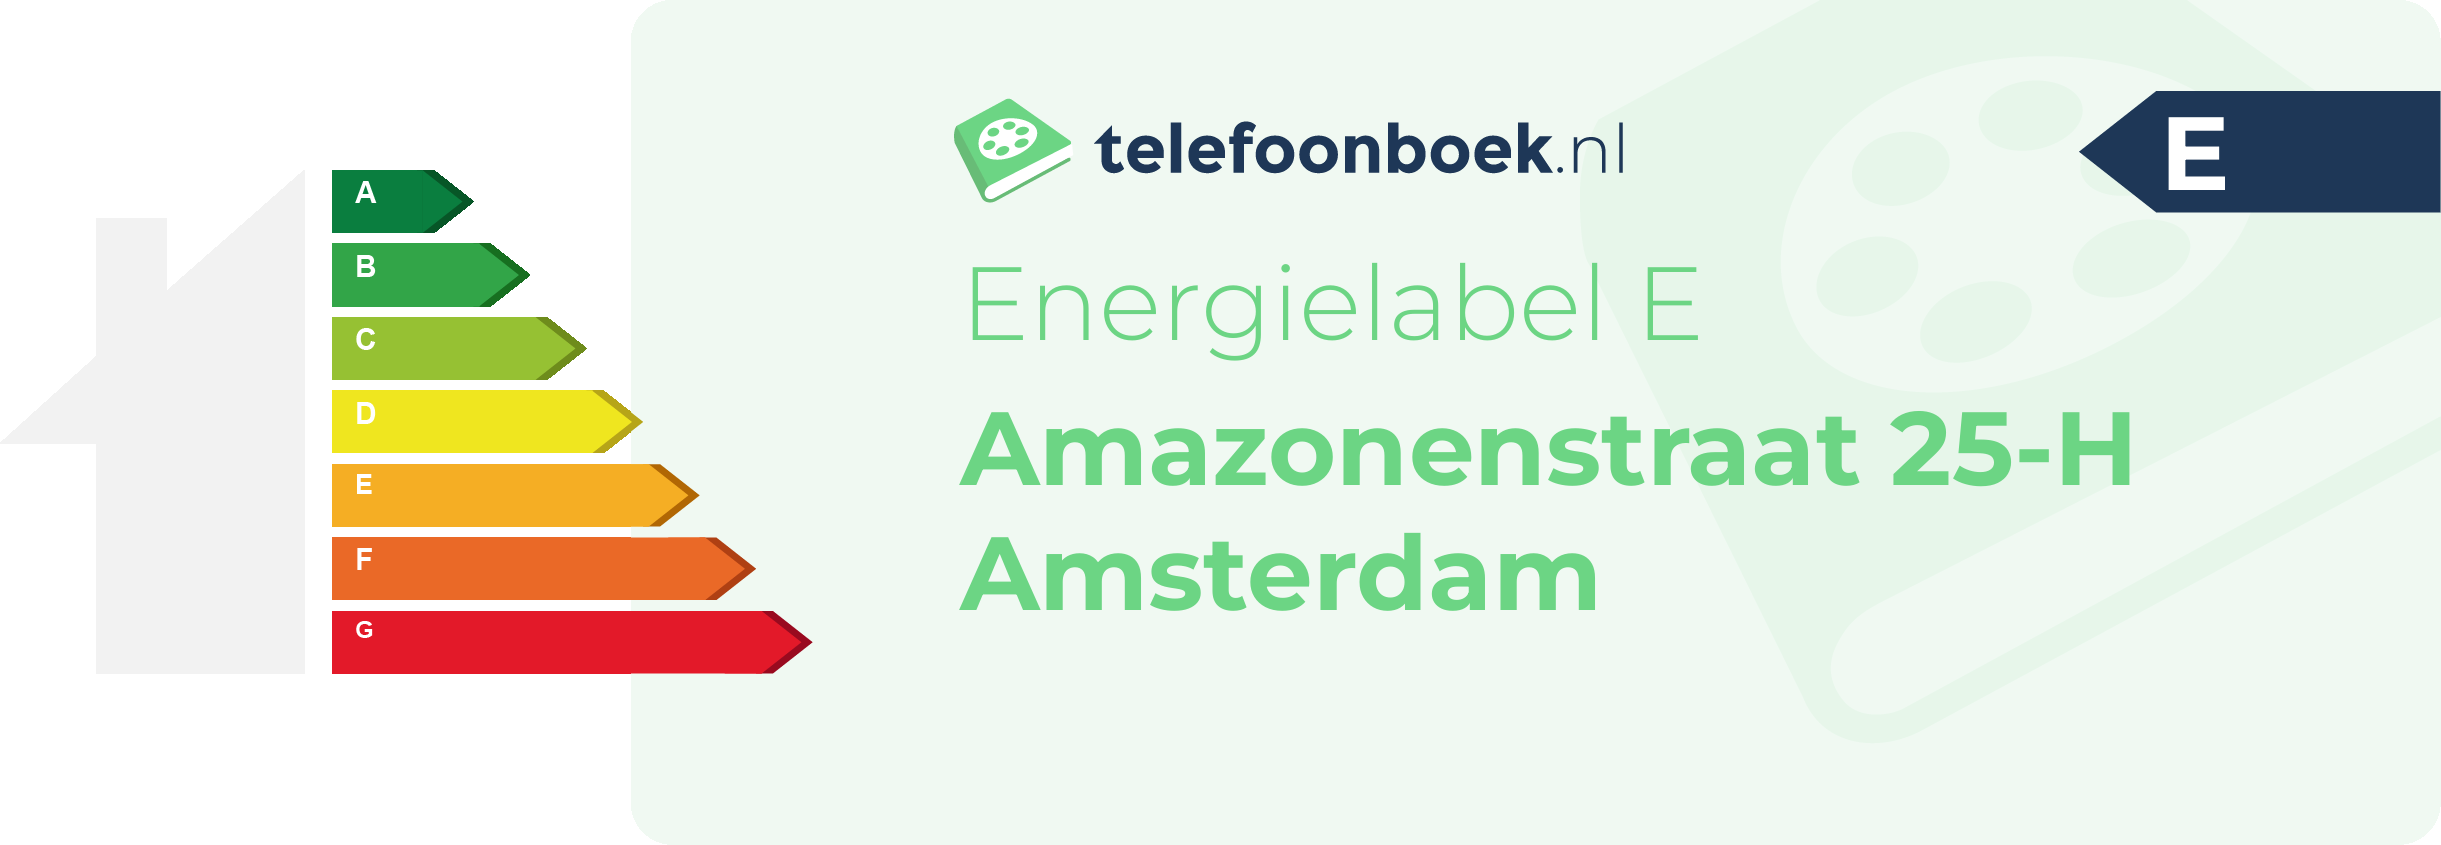 Energielabel Amazonenstraat 25-H Amsterdam